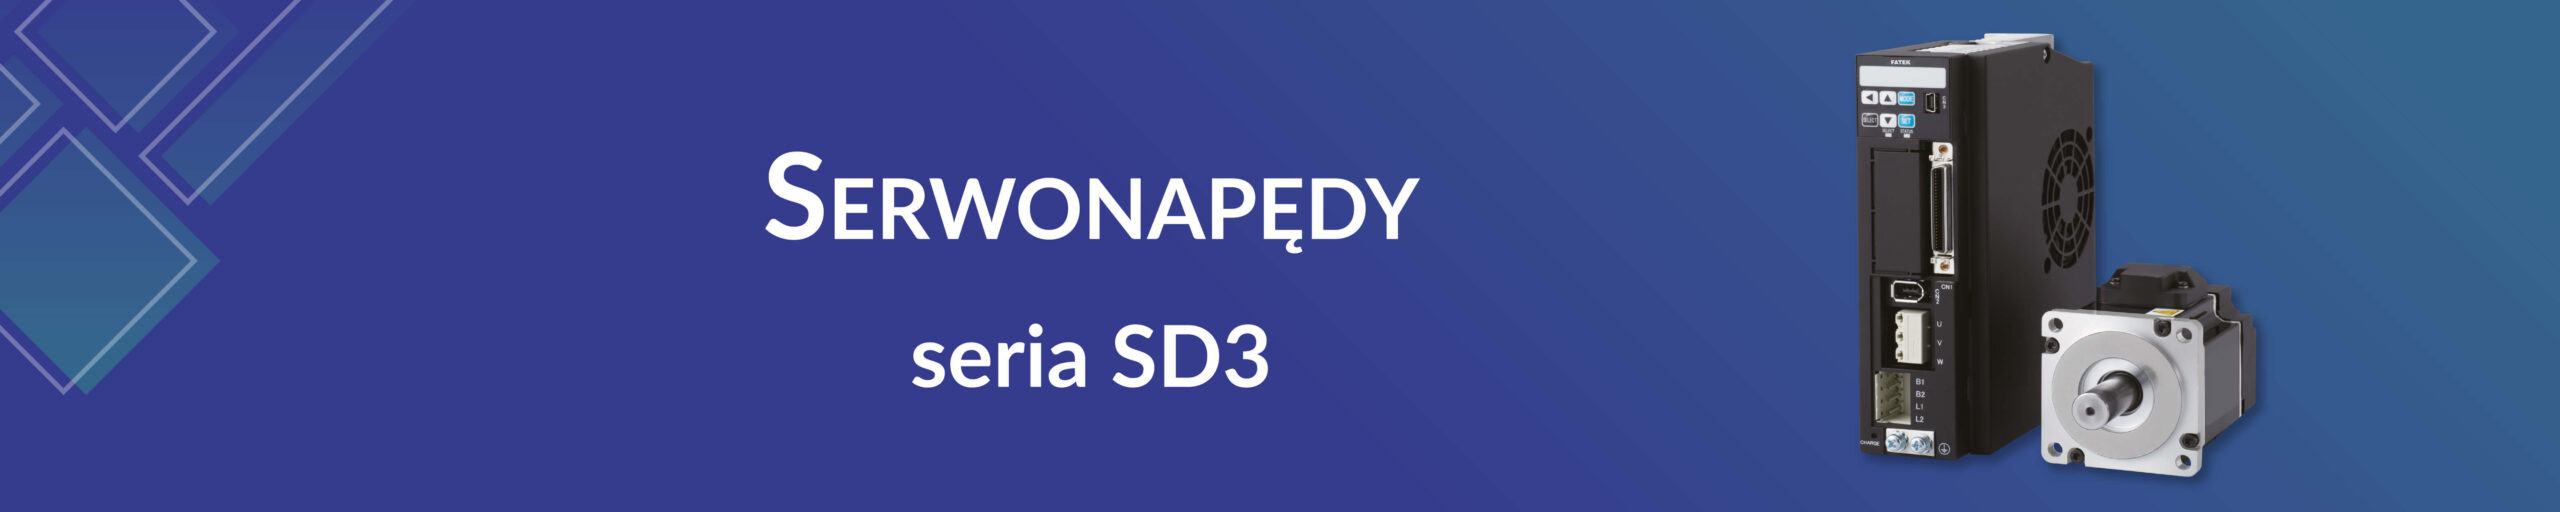 Serwonapedy_seria-SD3